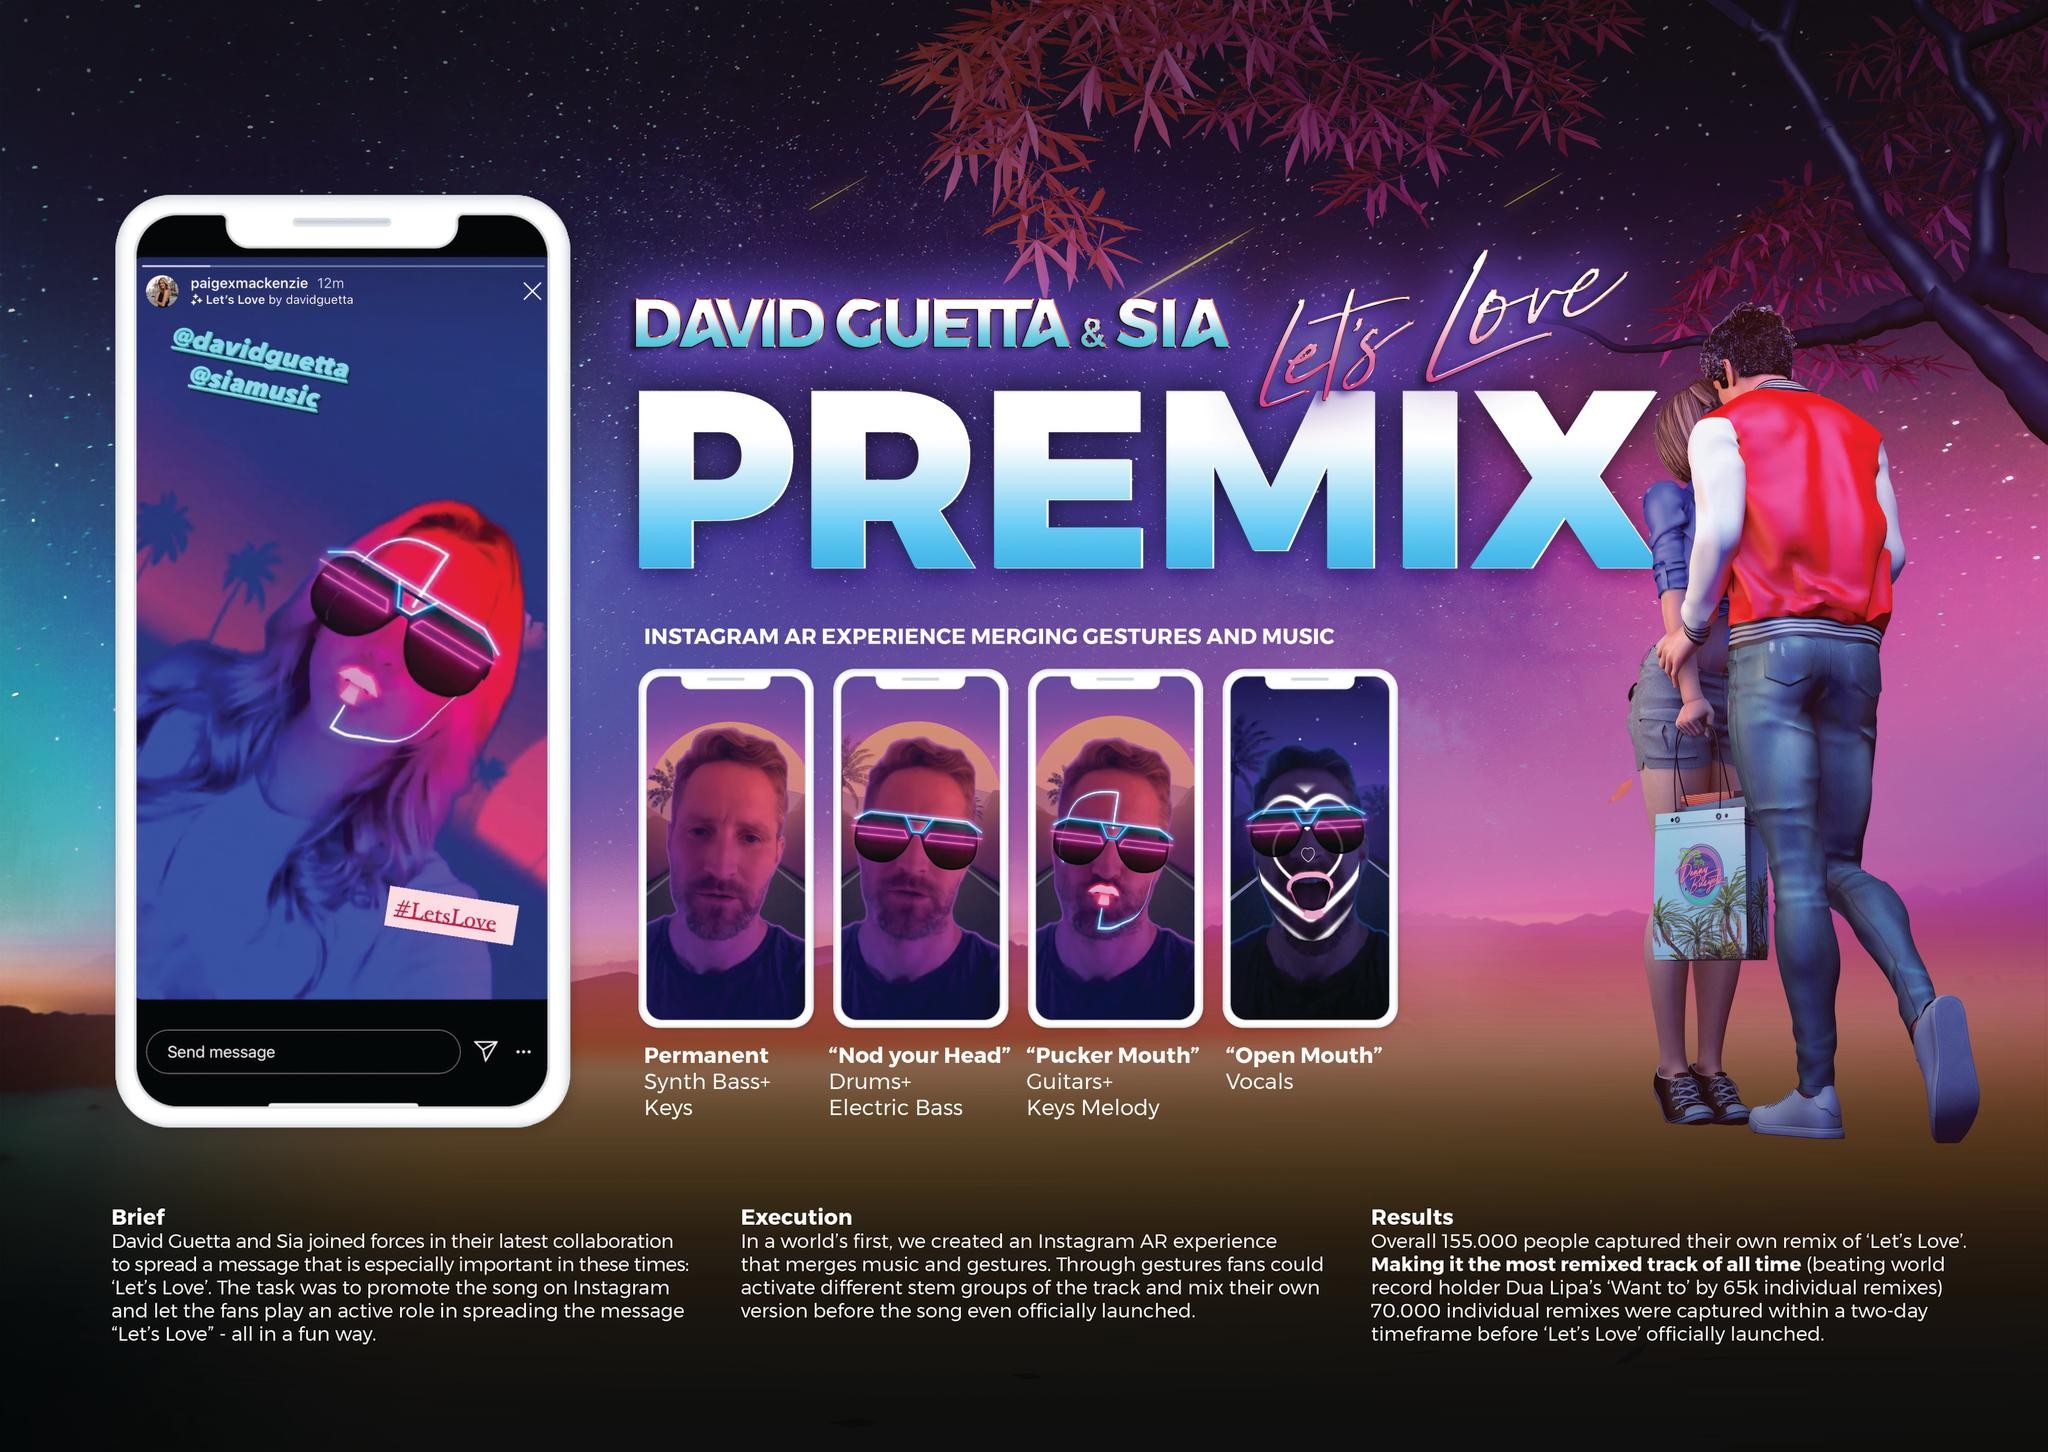 David Guetta 'Let's Love' PREMIX